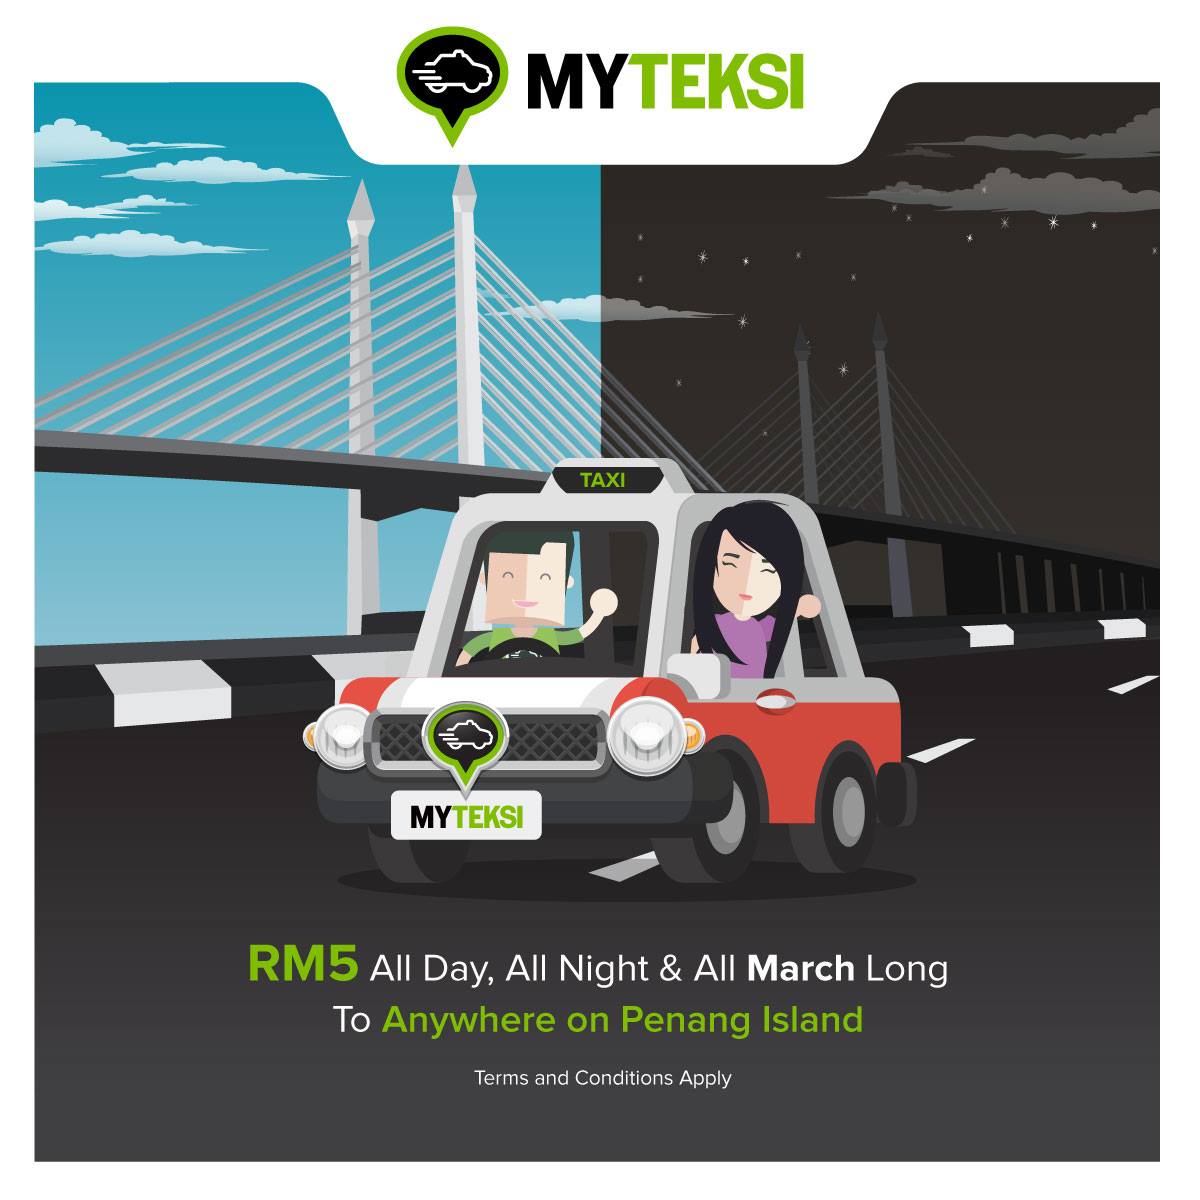 MyTeksi RM5 Penang Island Flat Rate Promotion